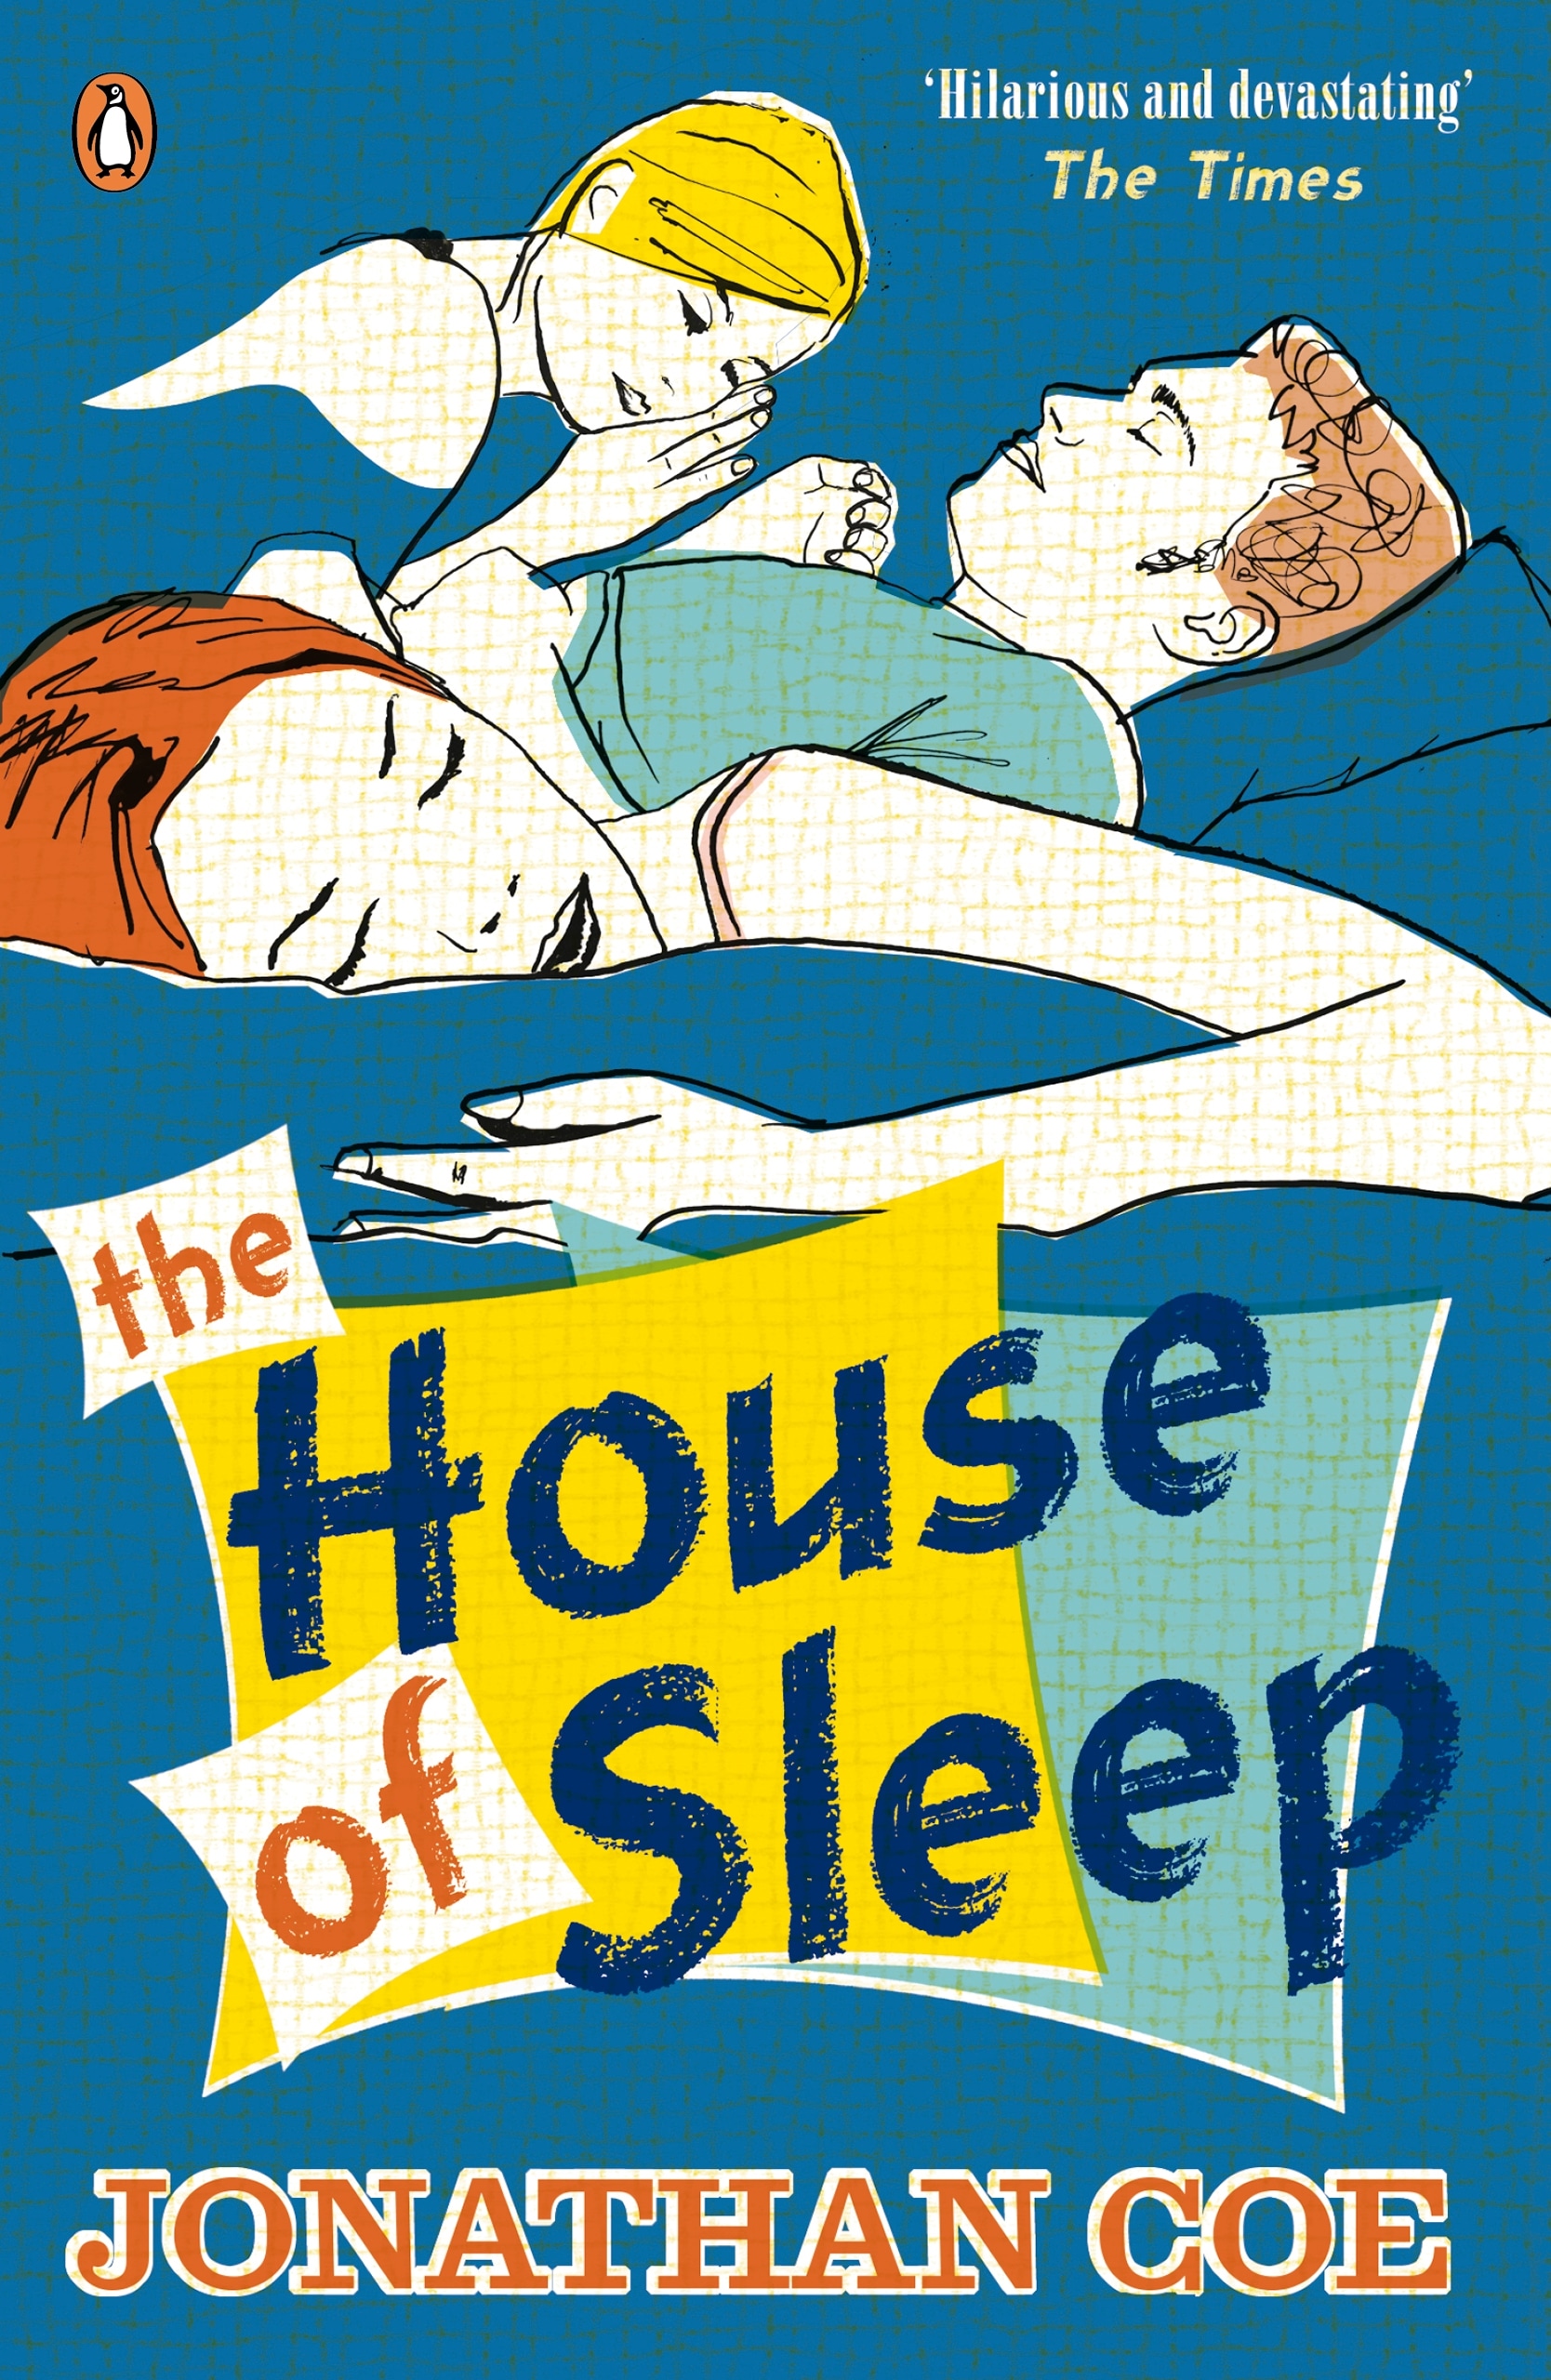 Book “The House of Sleep” by Jonathan Coe — June 26, 2014